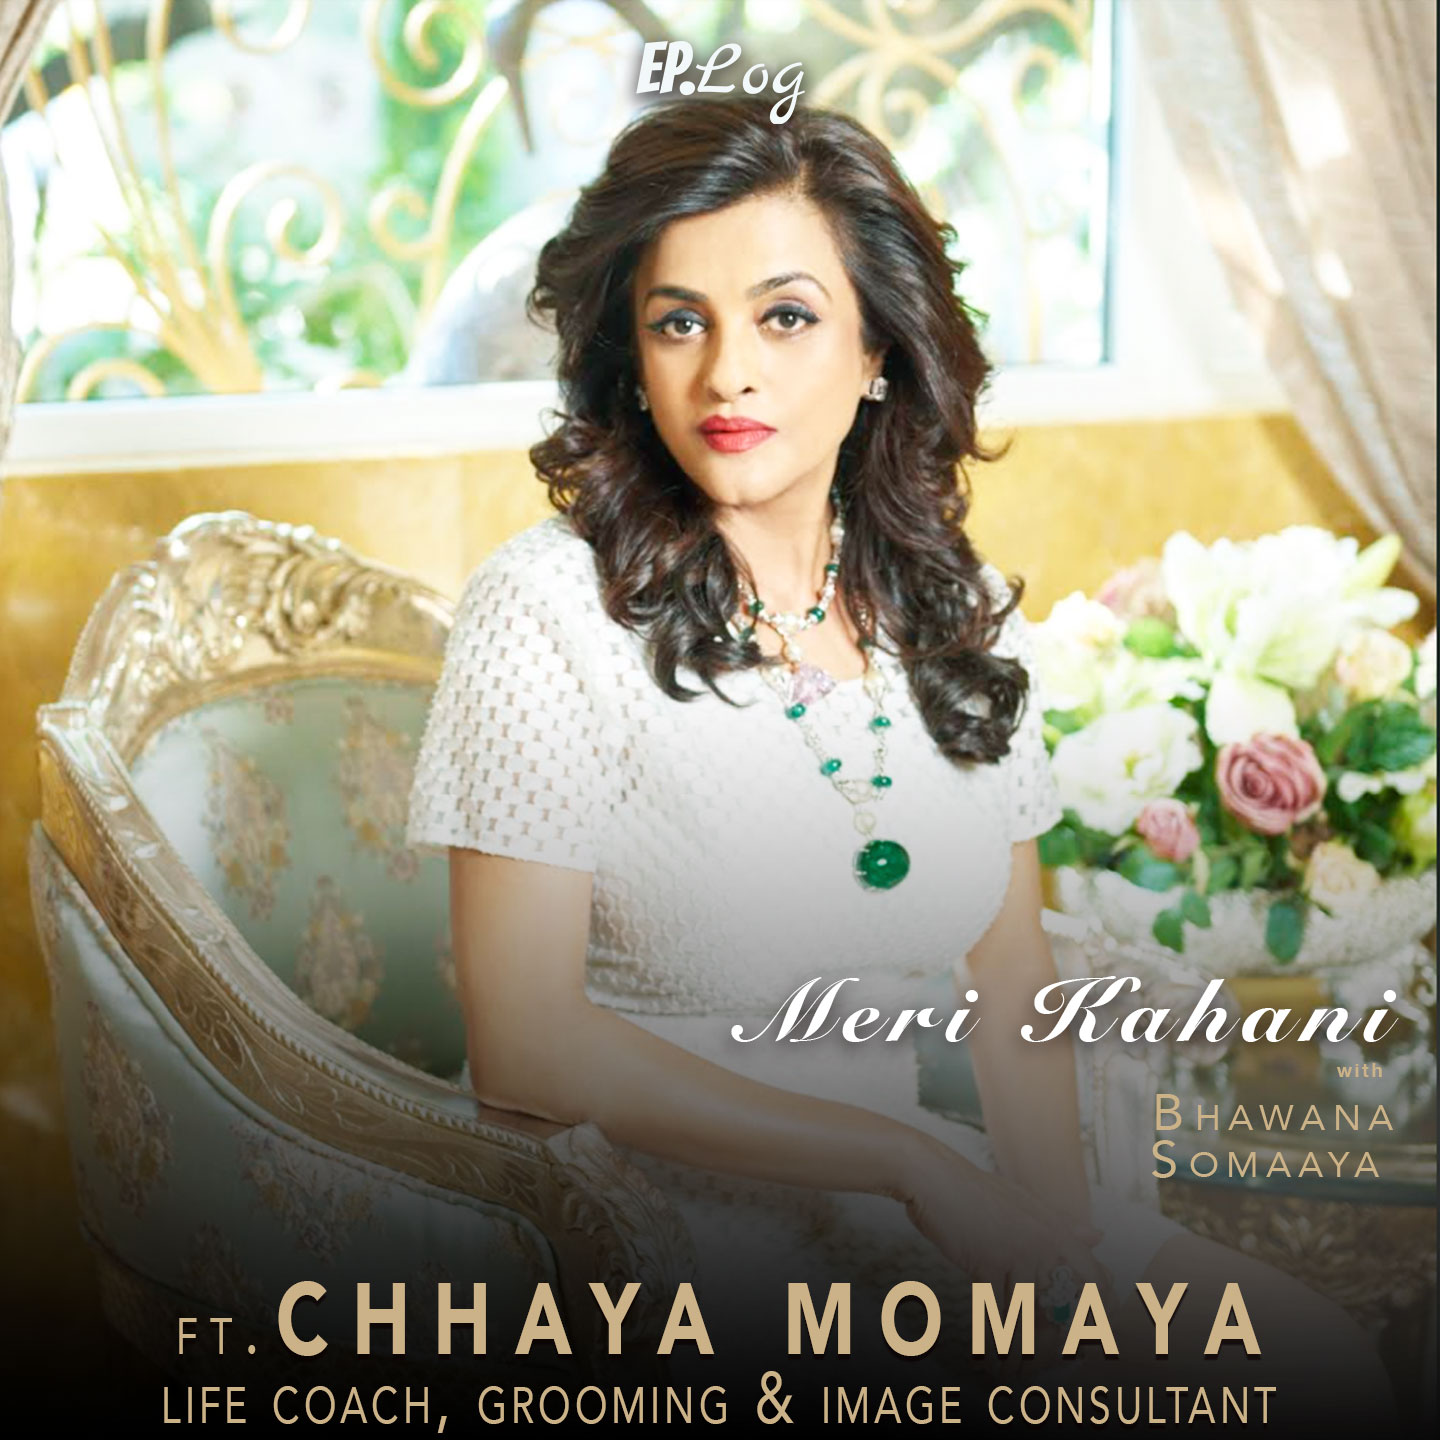 Meri kahani ft. Chhaya Momaya, Life Coach | Grooming and Image Consultant